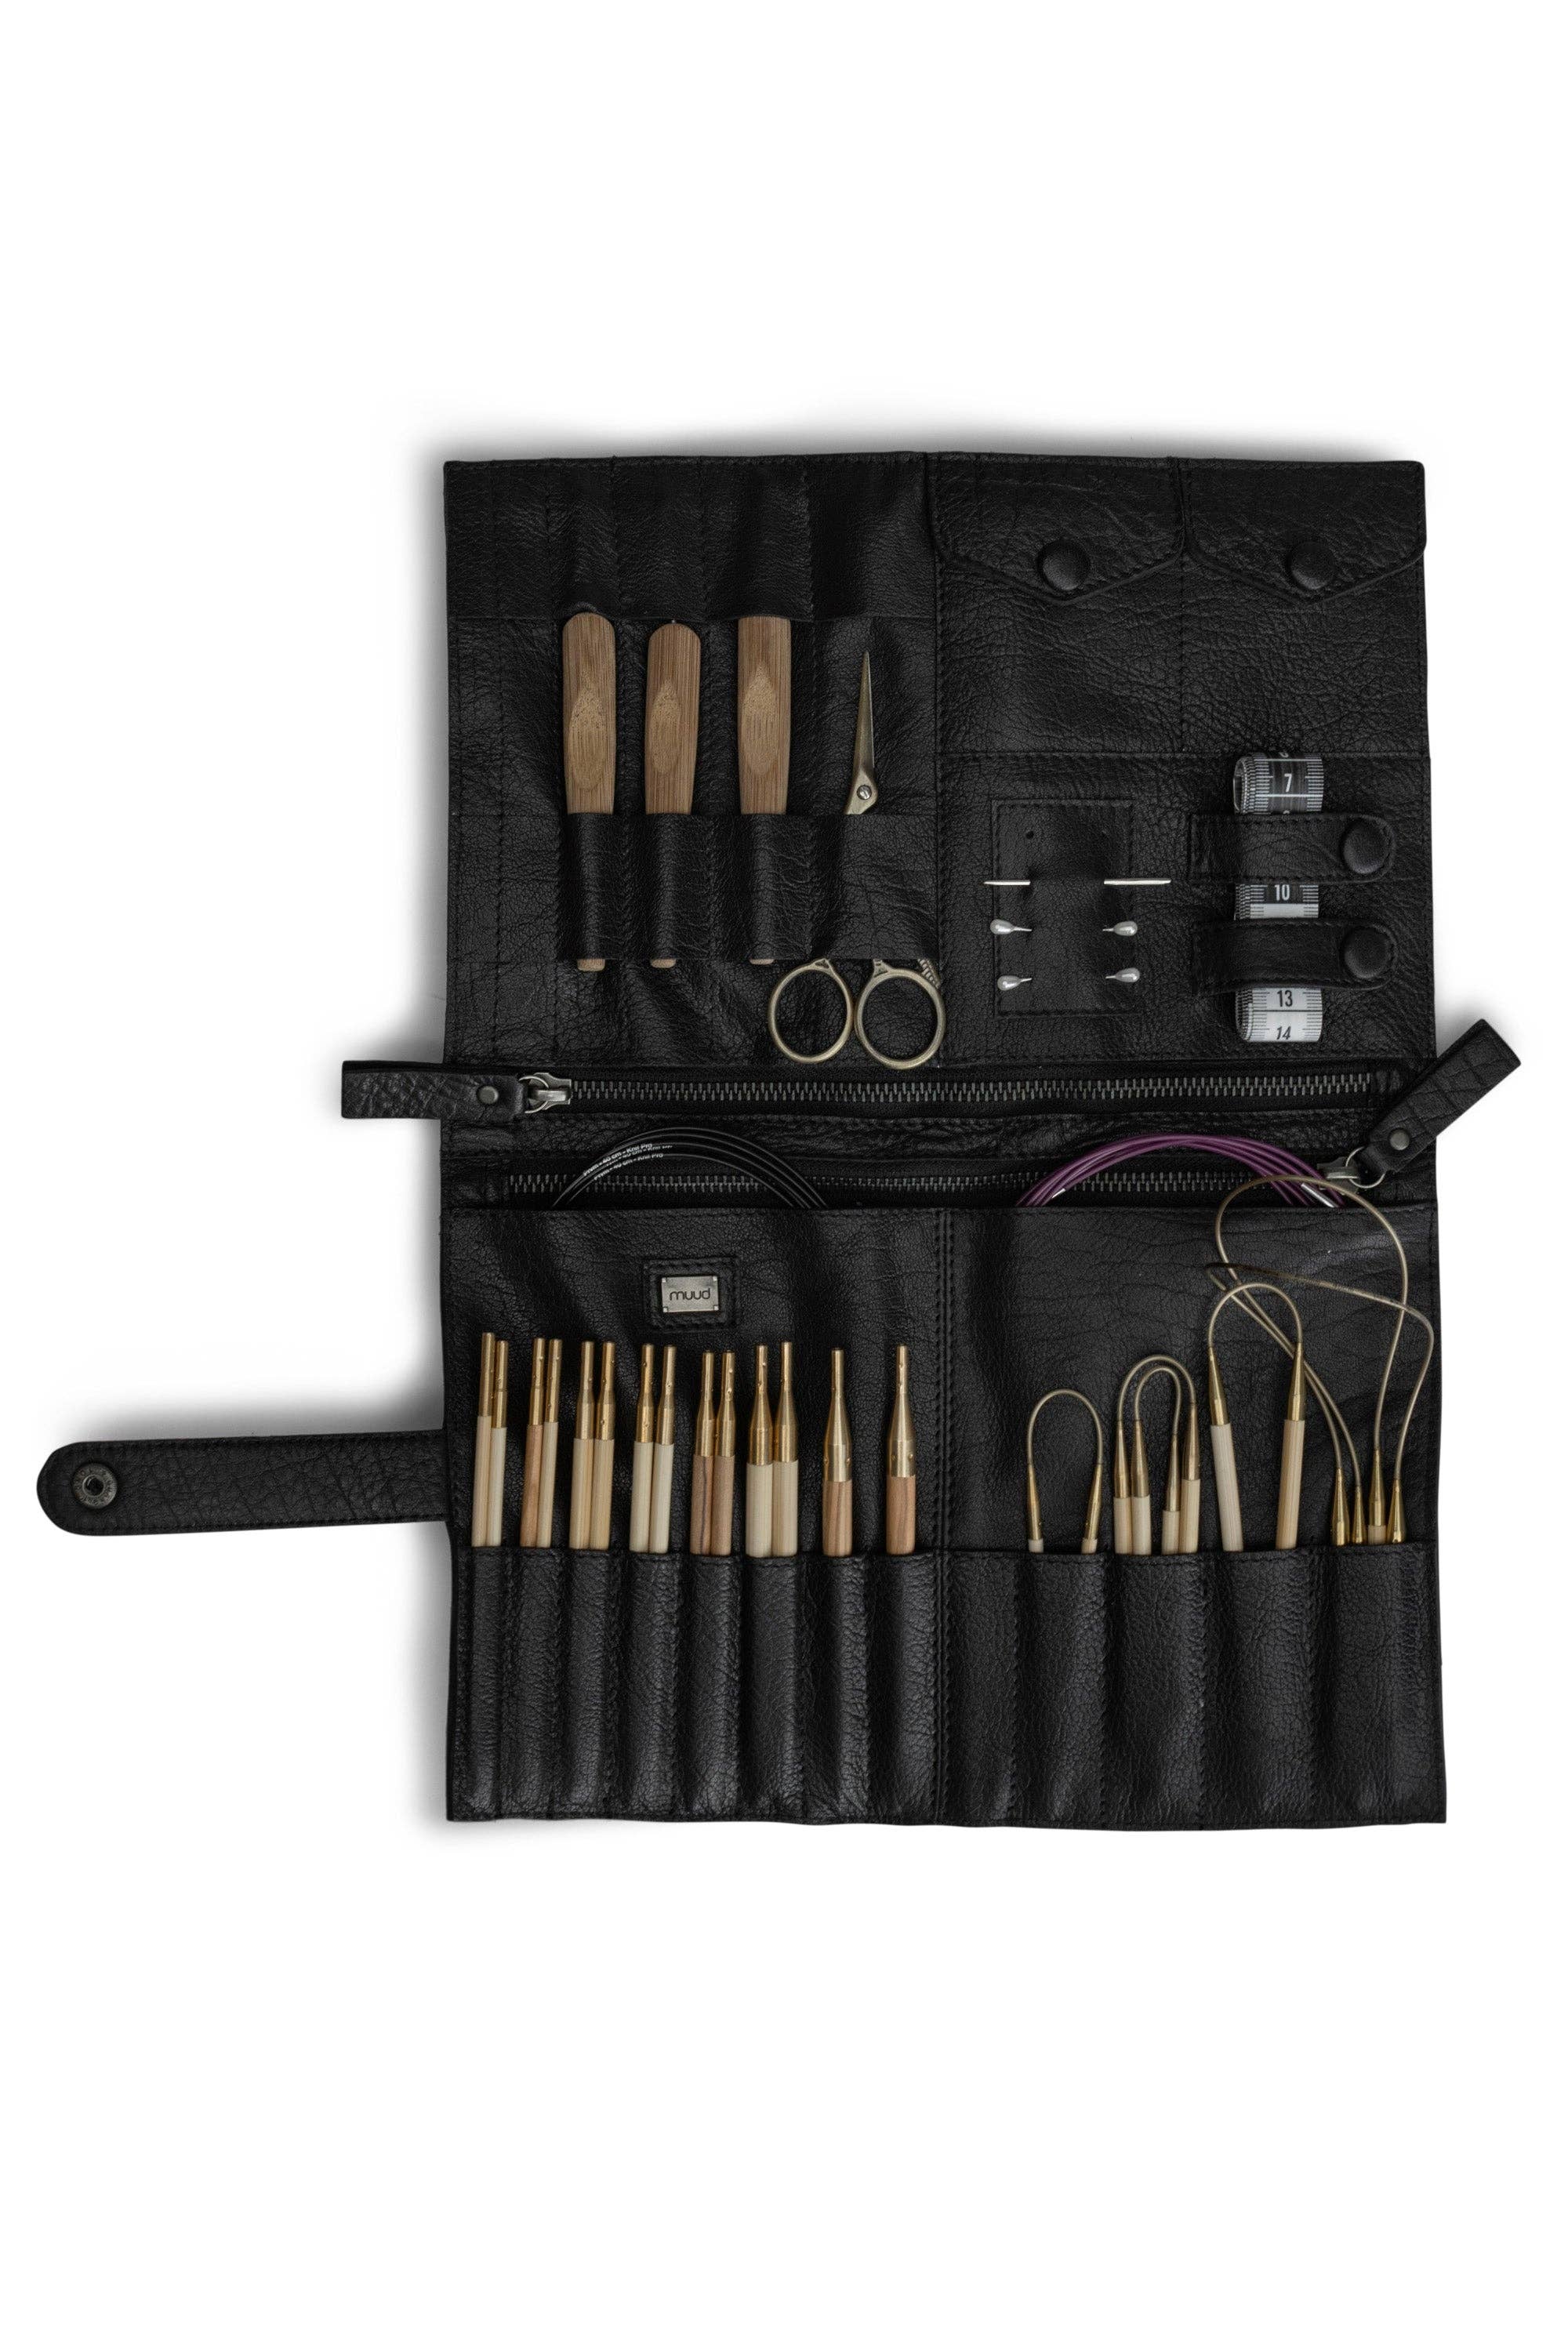 muud  Billie Etui -Leather case for crochet hooks and knitting needles